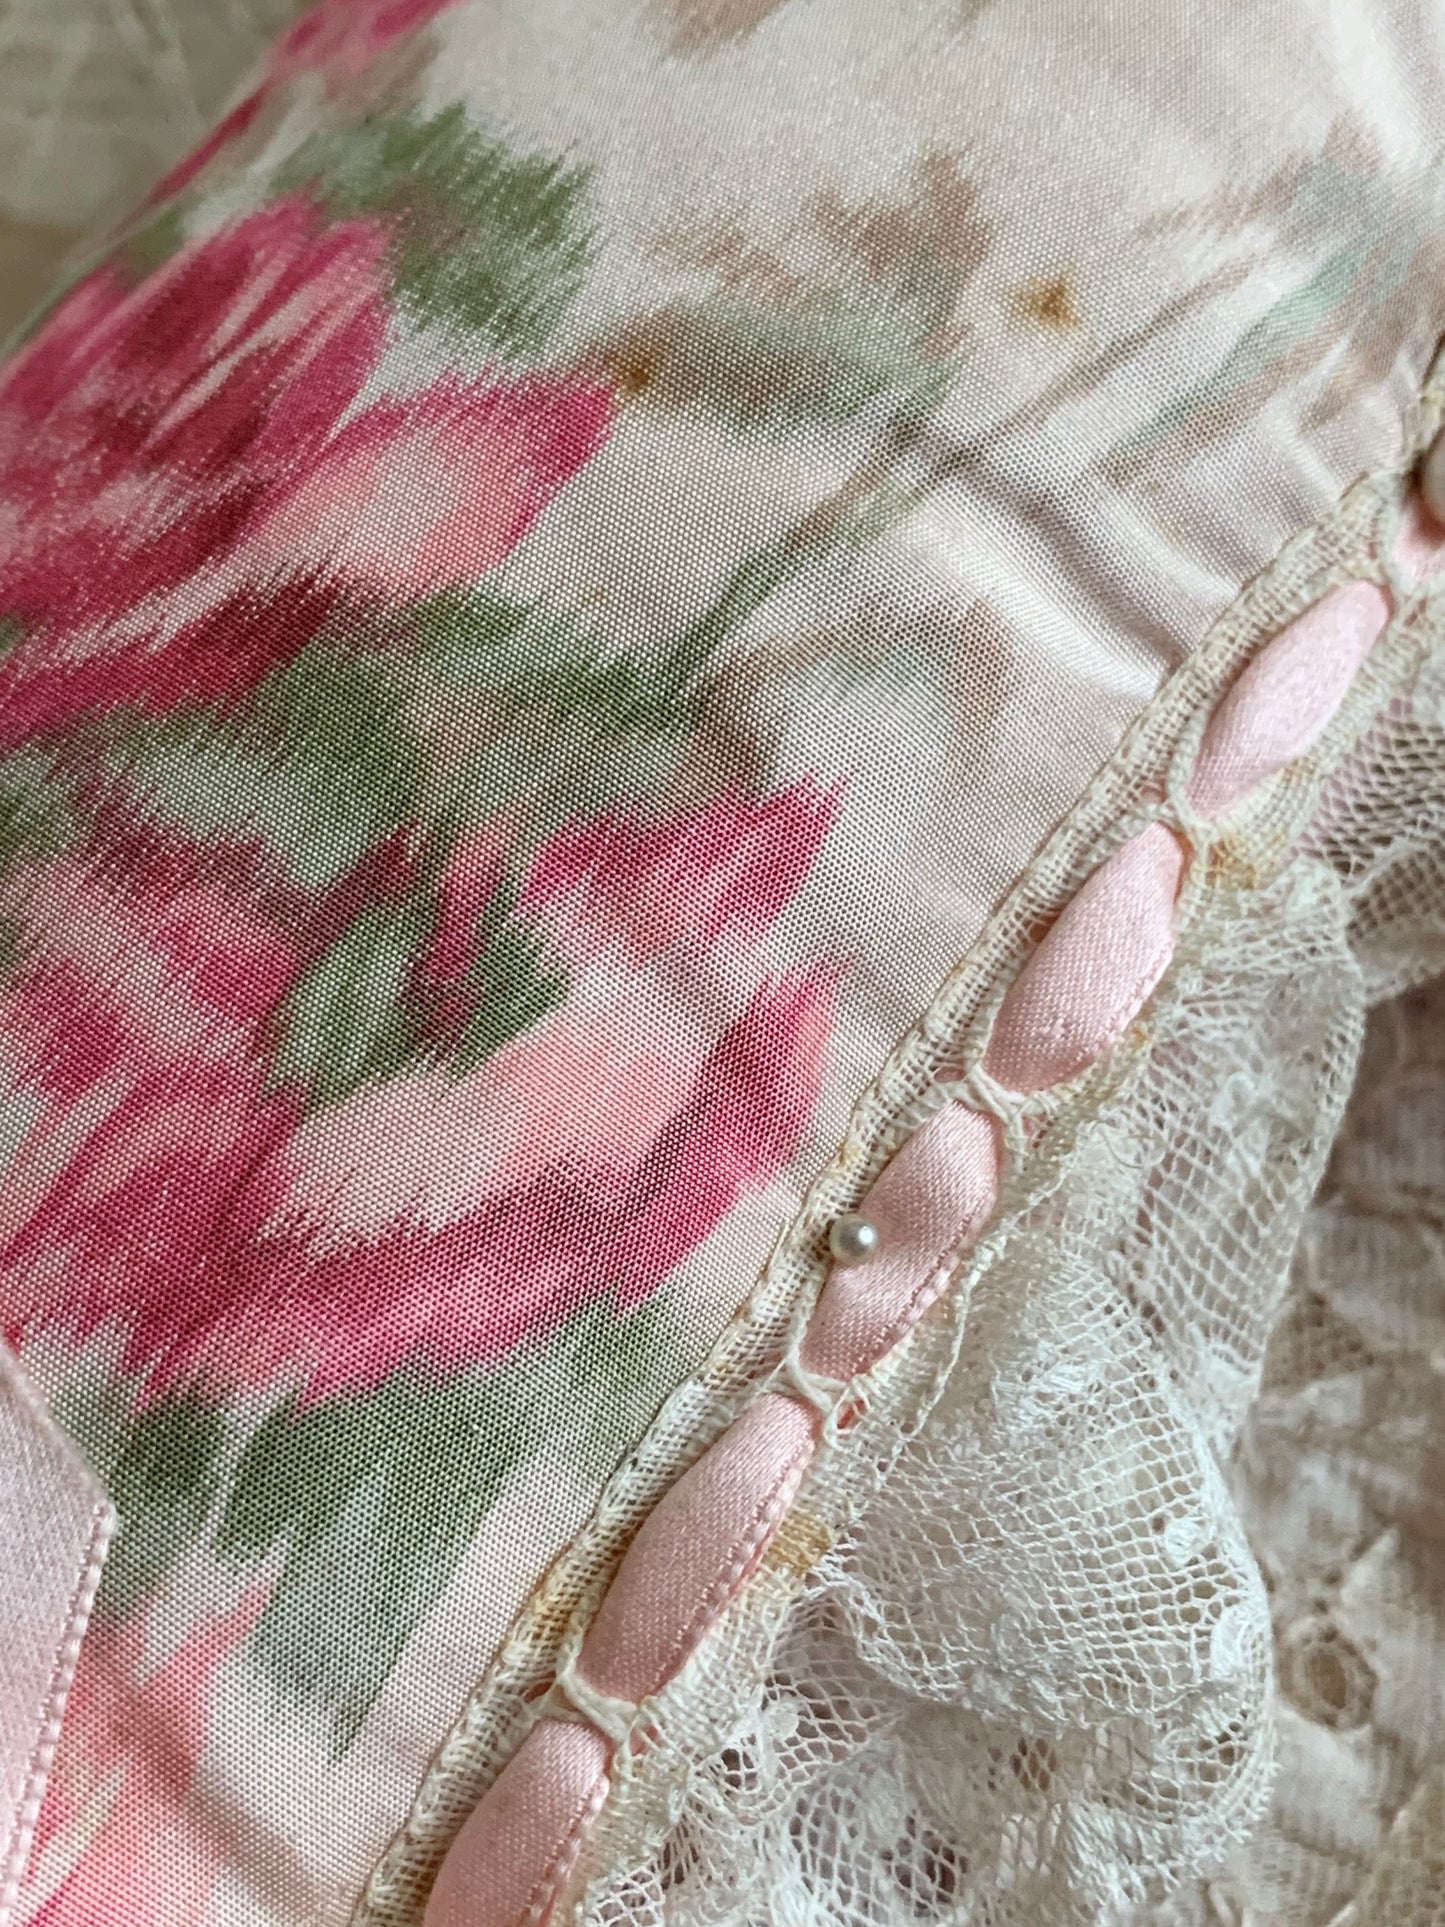 Vintage pink silk ribbon stuffed pincushion